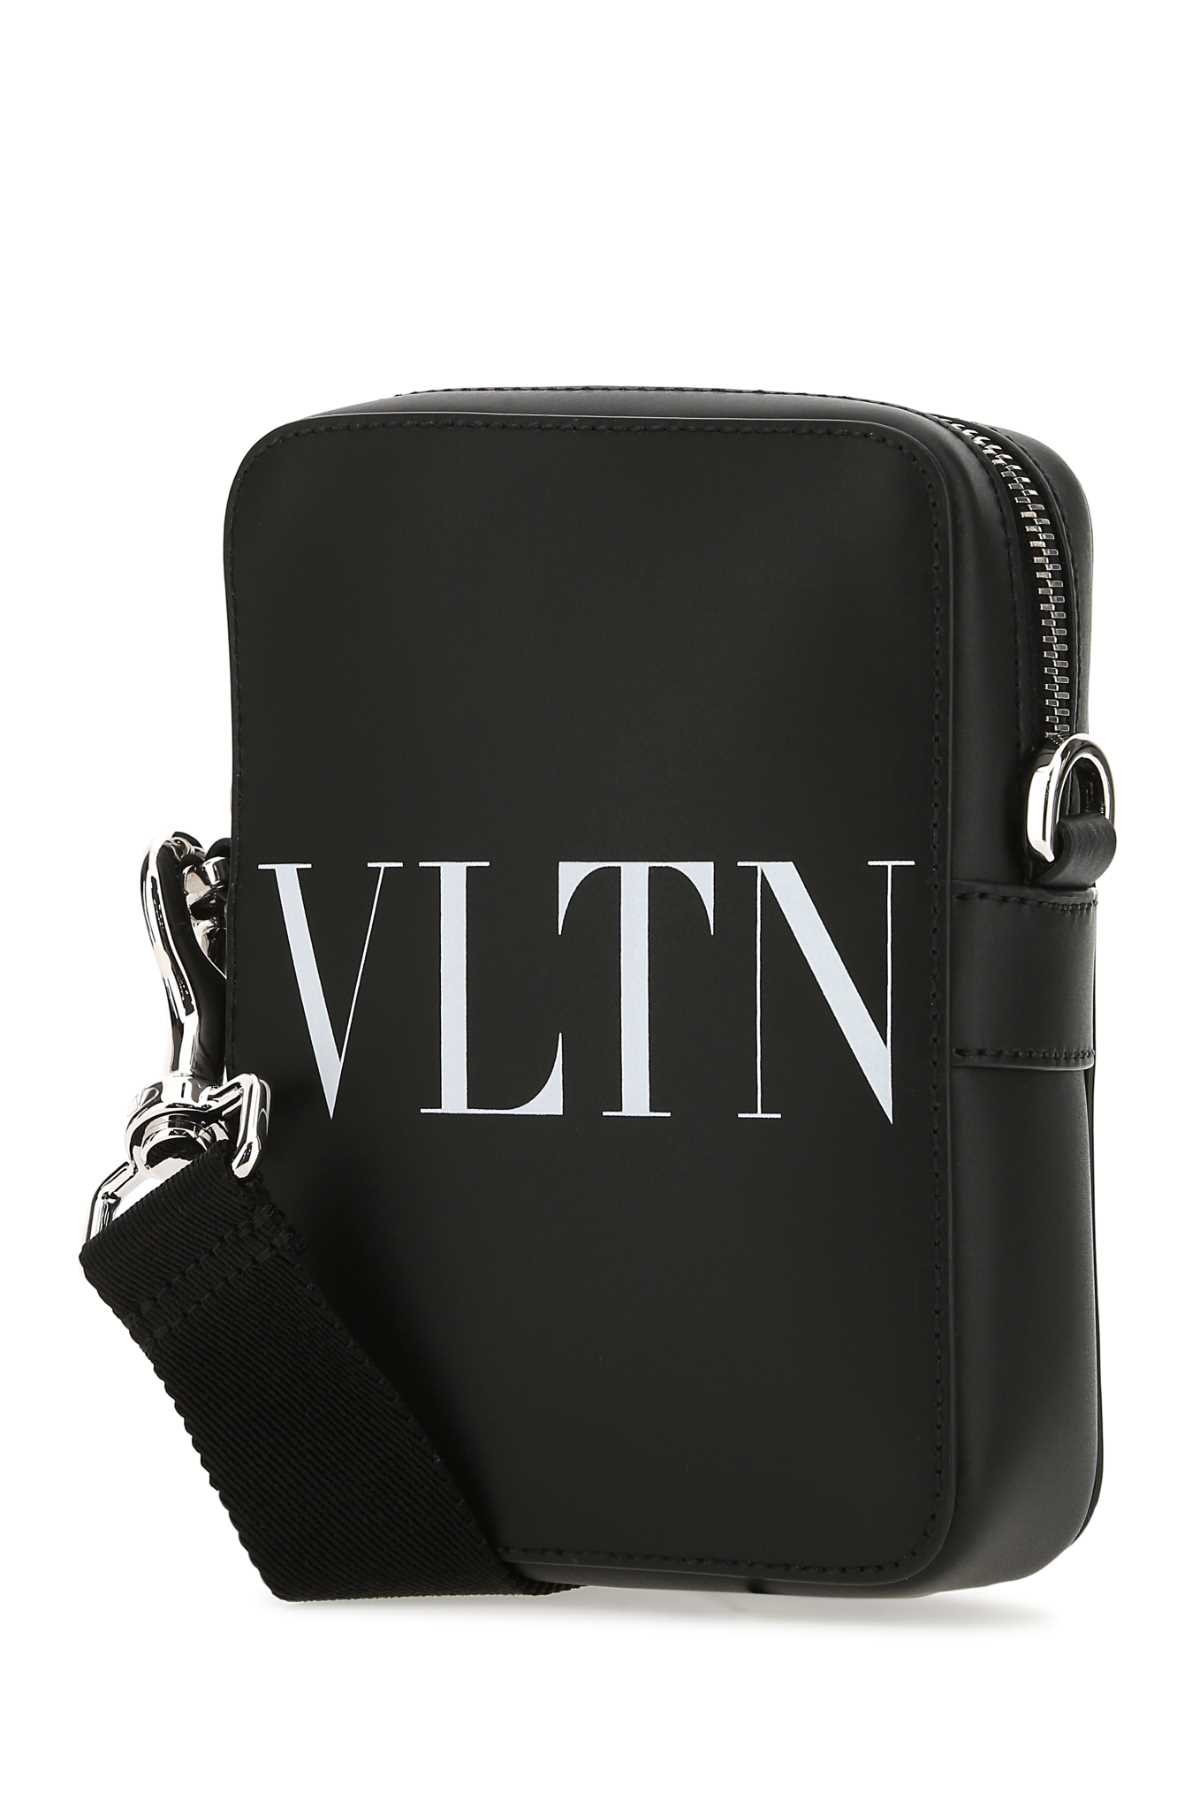 Valentino Garavani Black Leather Crossbody Bag